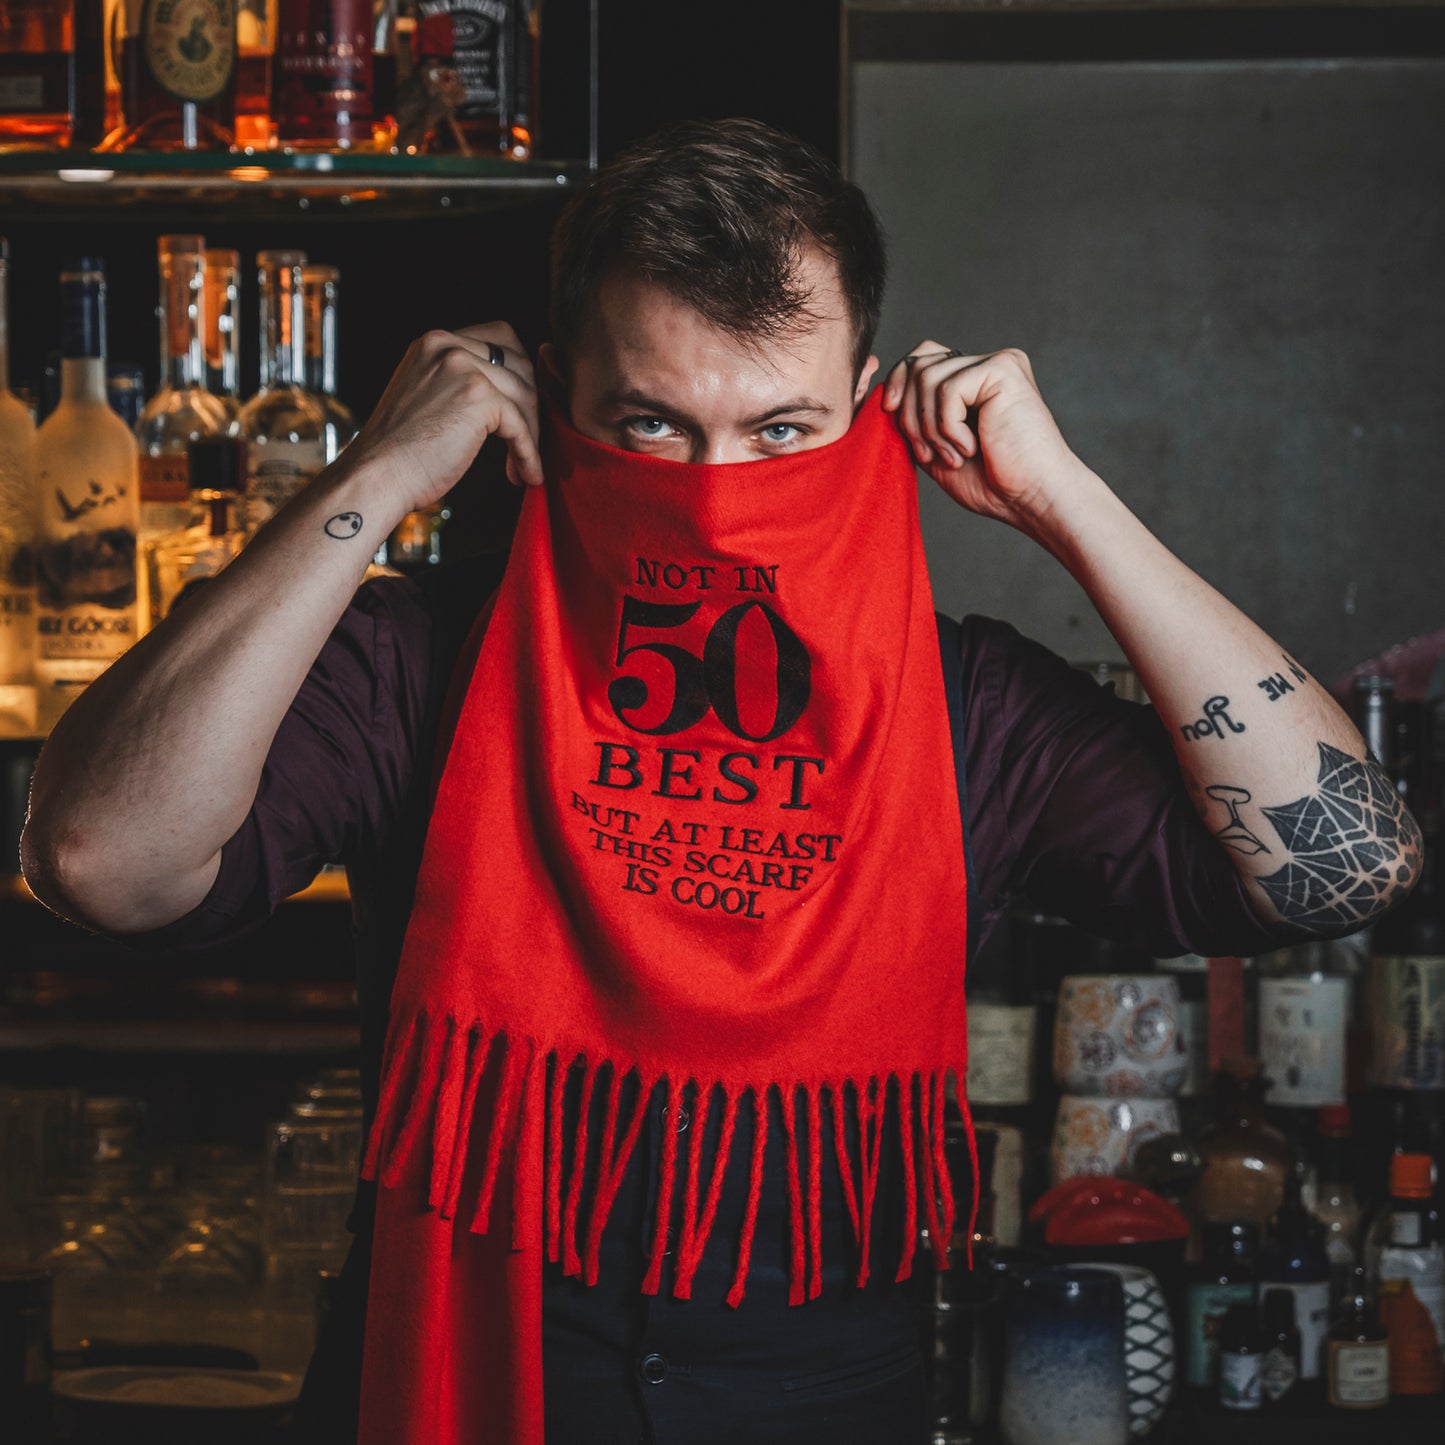 50 Best Bars Scarf Joke Gift Set by Broken Bartender